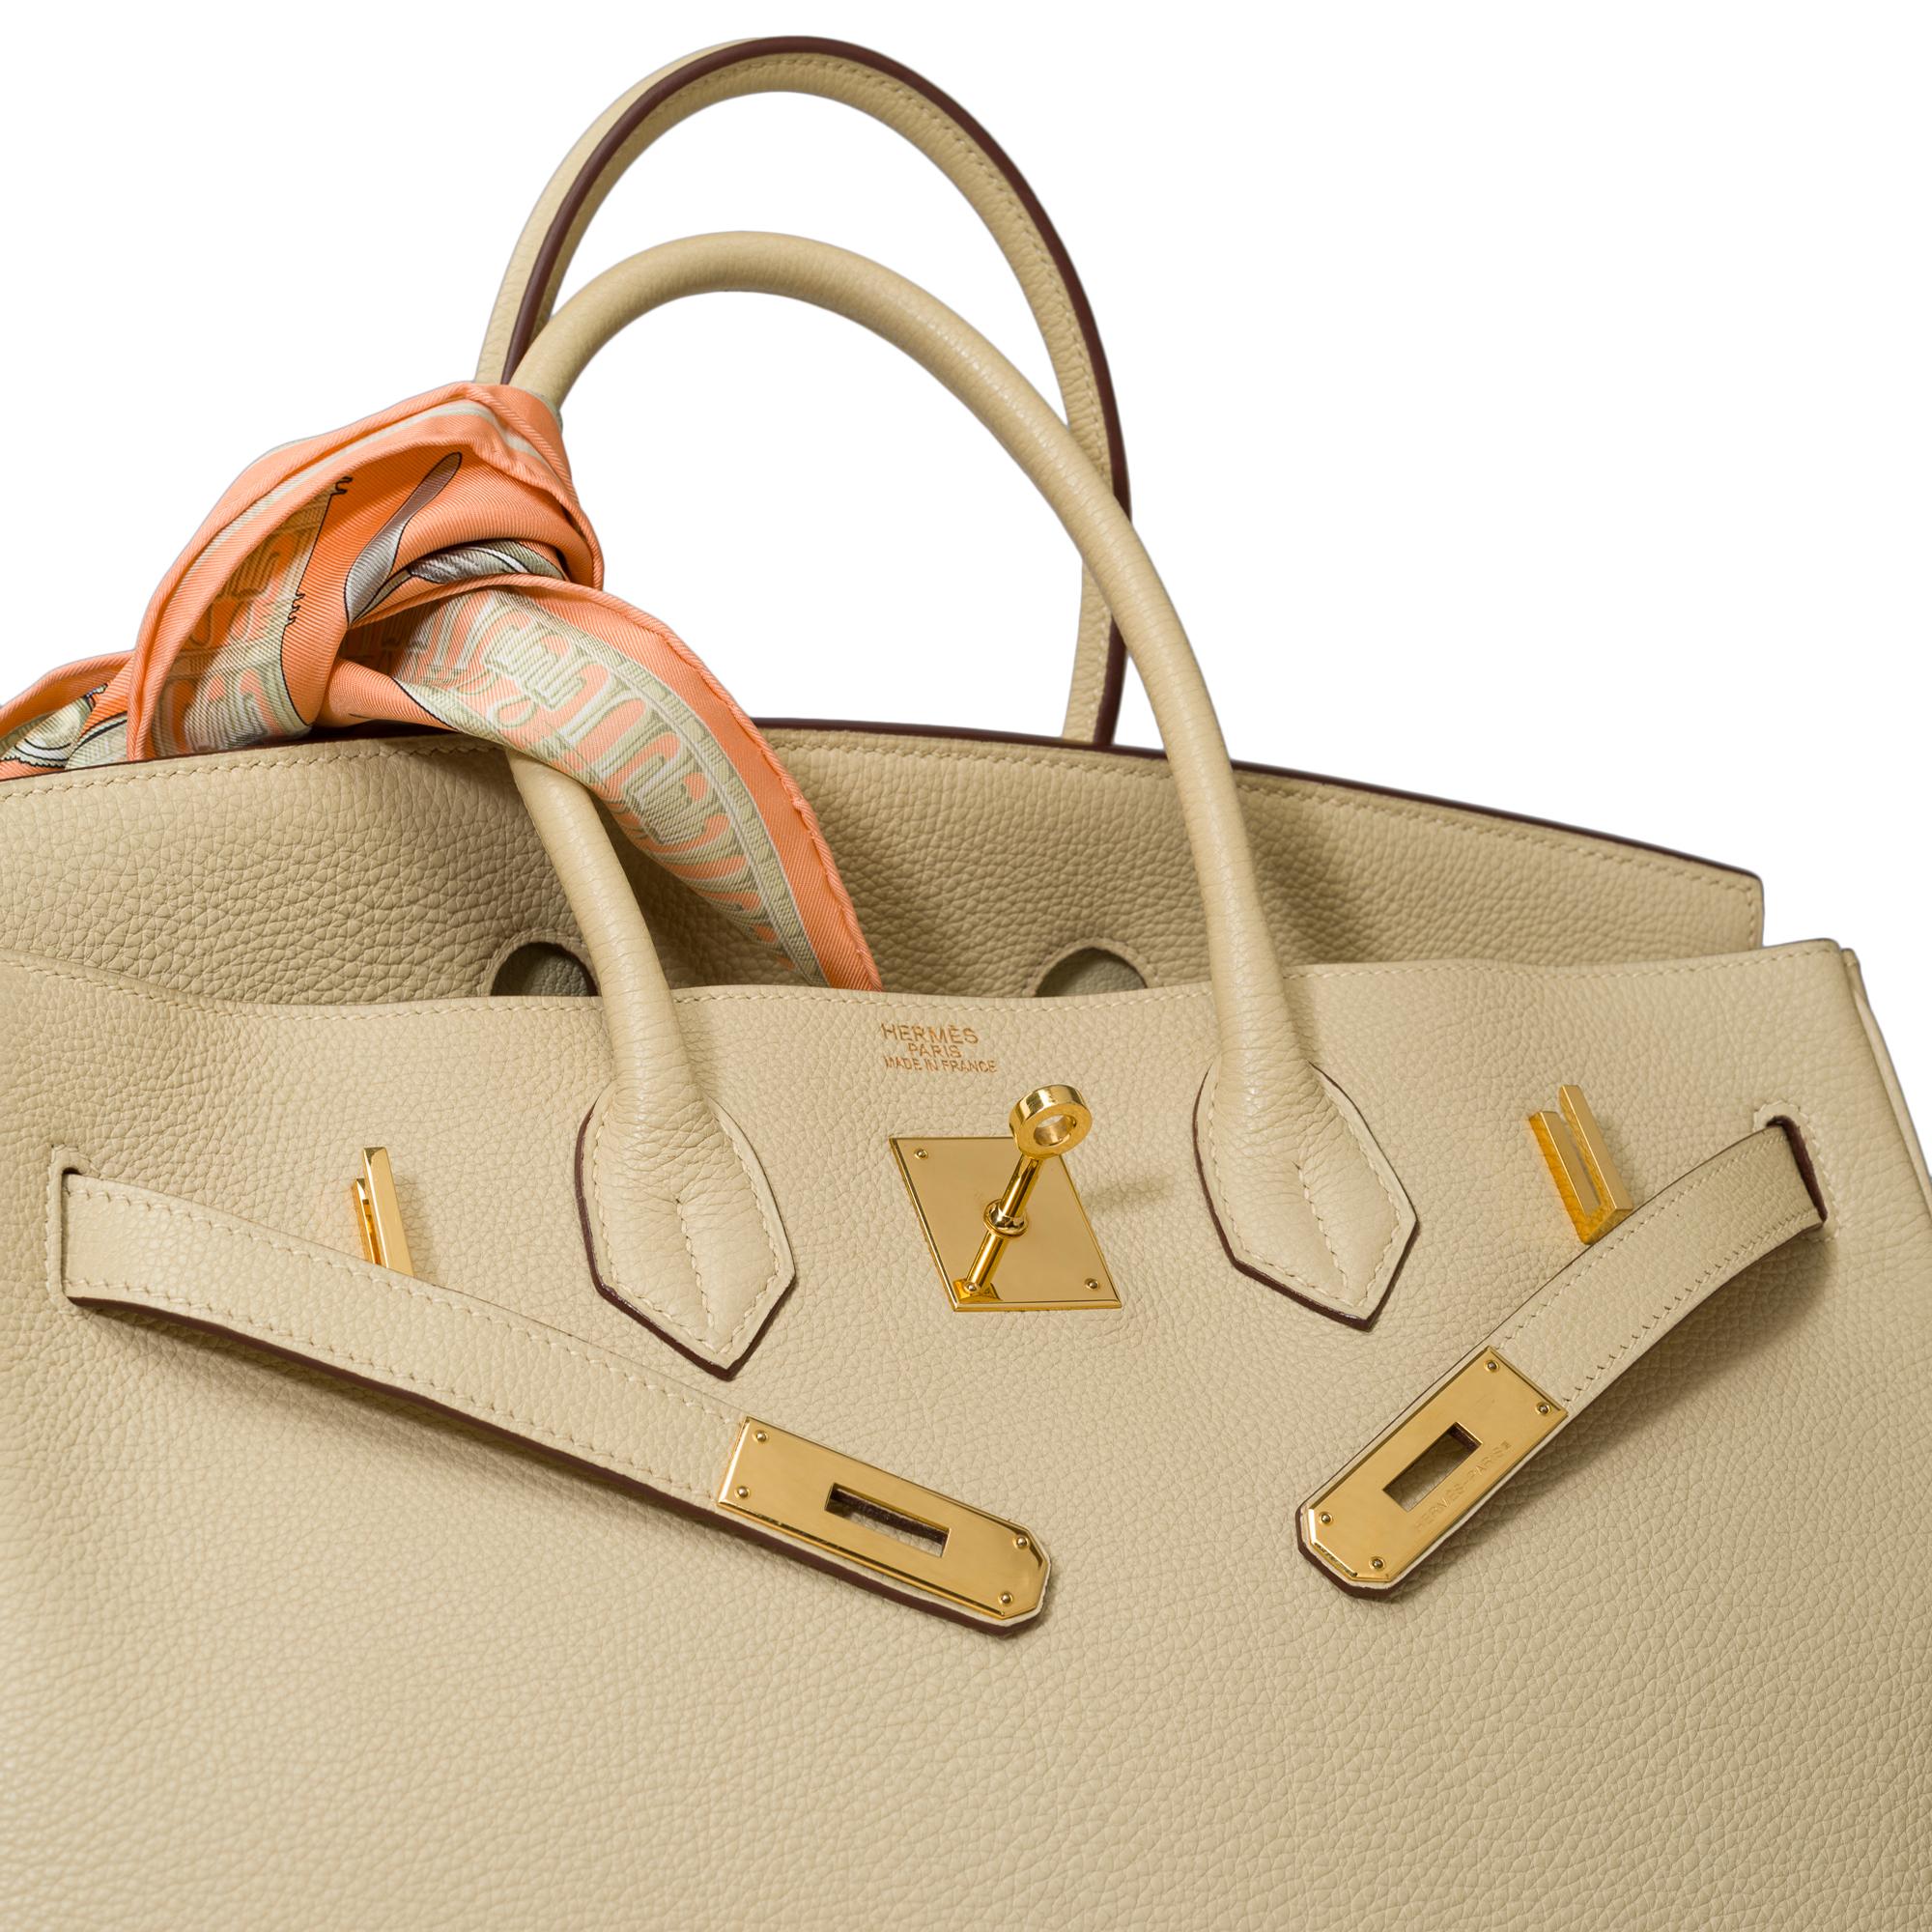 Amazing Hermès Birkin 35 handbag in Parchemin Togo leather, GHW 3